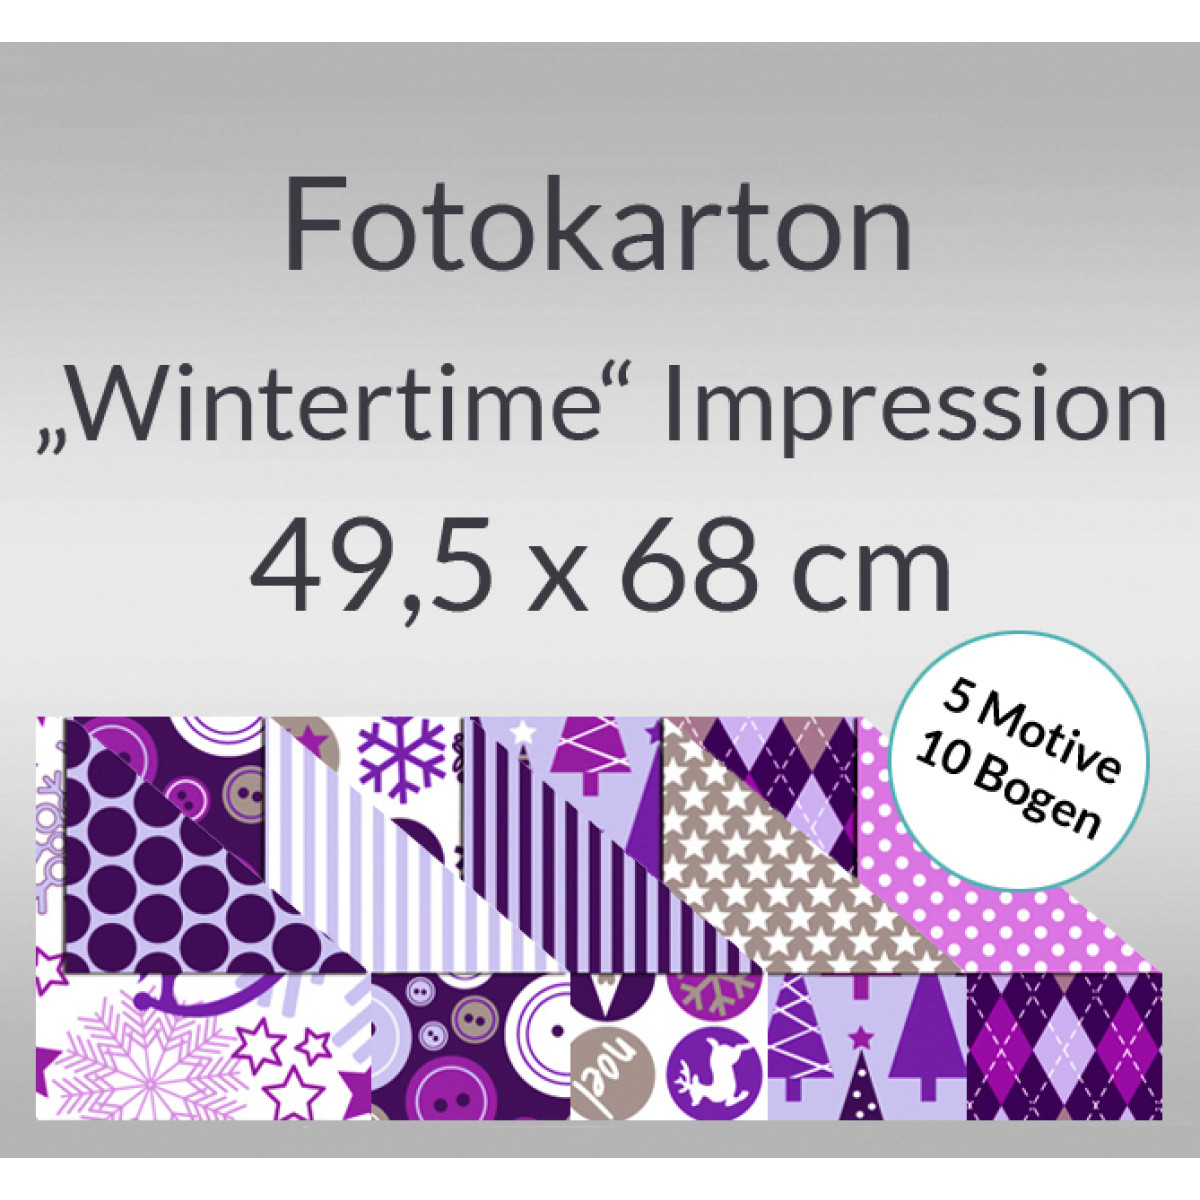 Fotokarton "Wintertime" Impression 49,5 x 68 cm - 10 Bogen sortiert